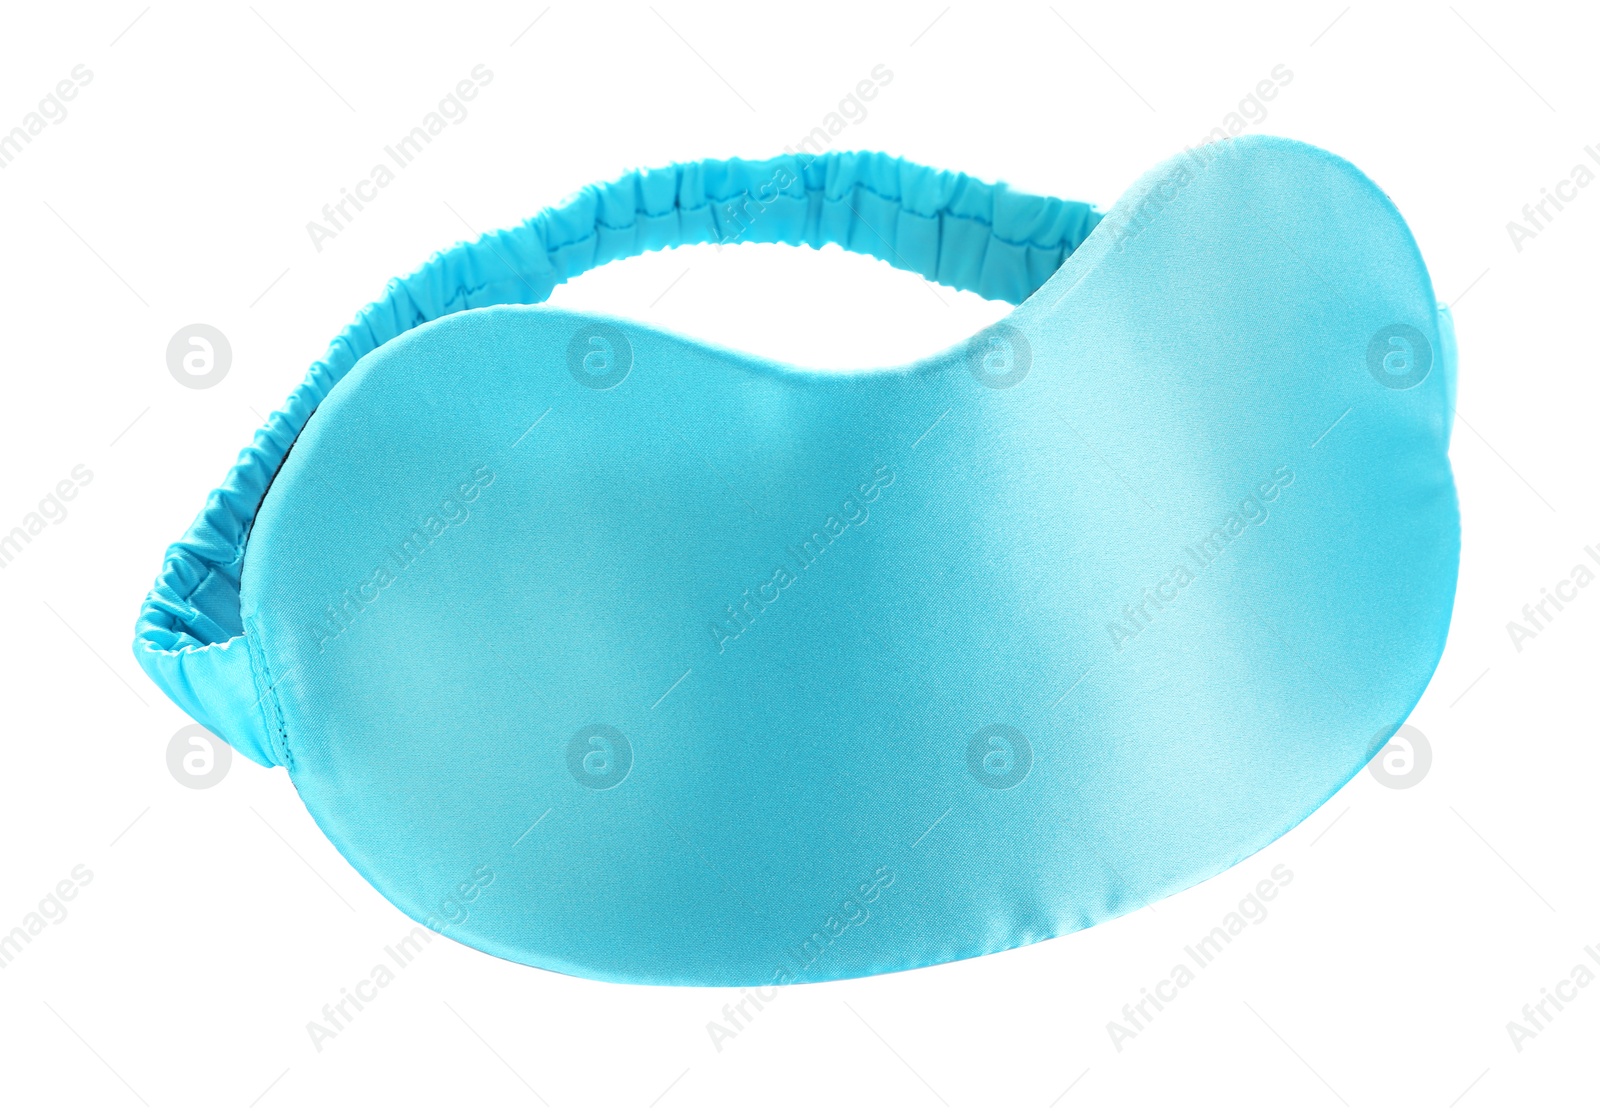 Photo of Turquoise sleeping mask isolated on white. Bedtime accessory